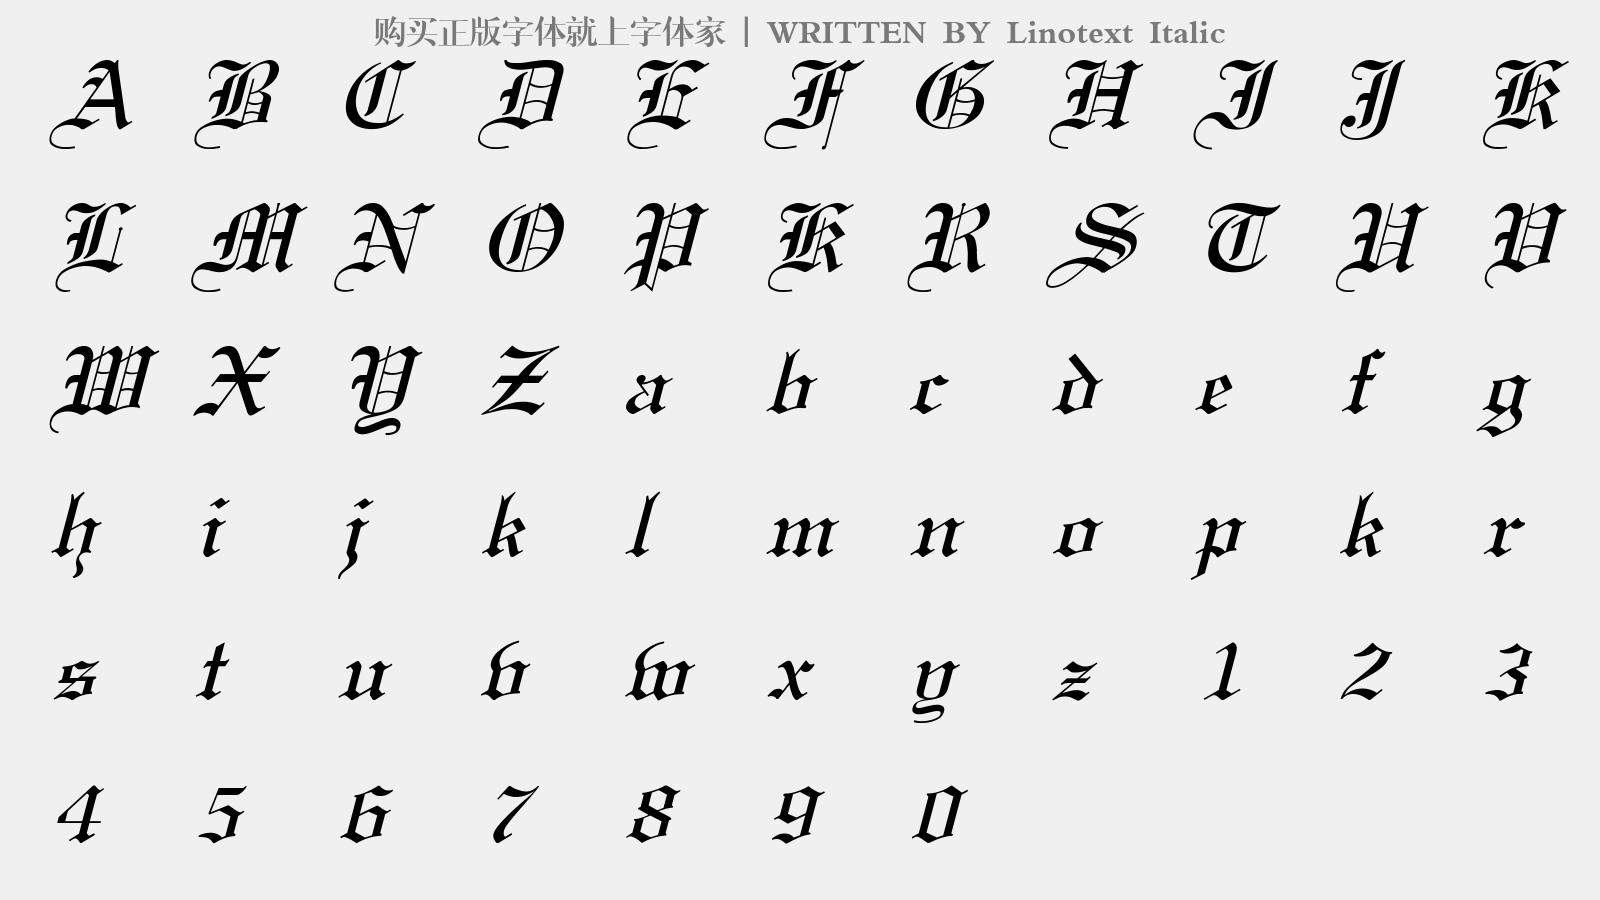 Linotext Italic - 大写字母/小写字母/数字